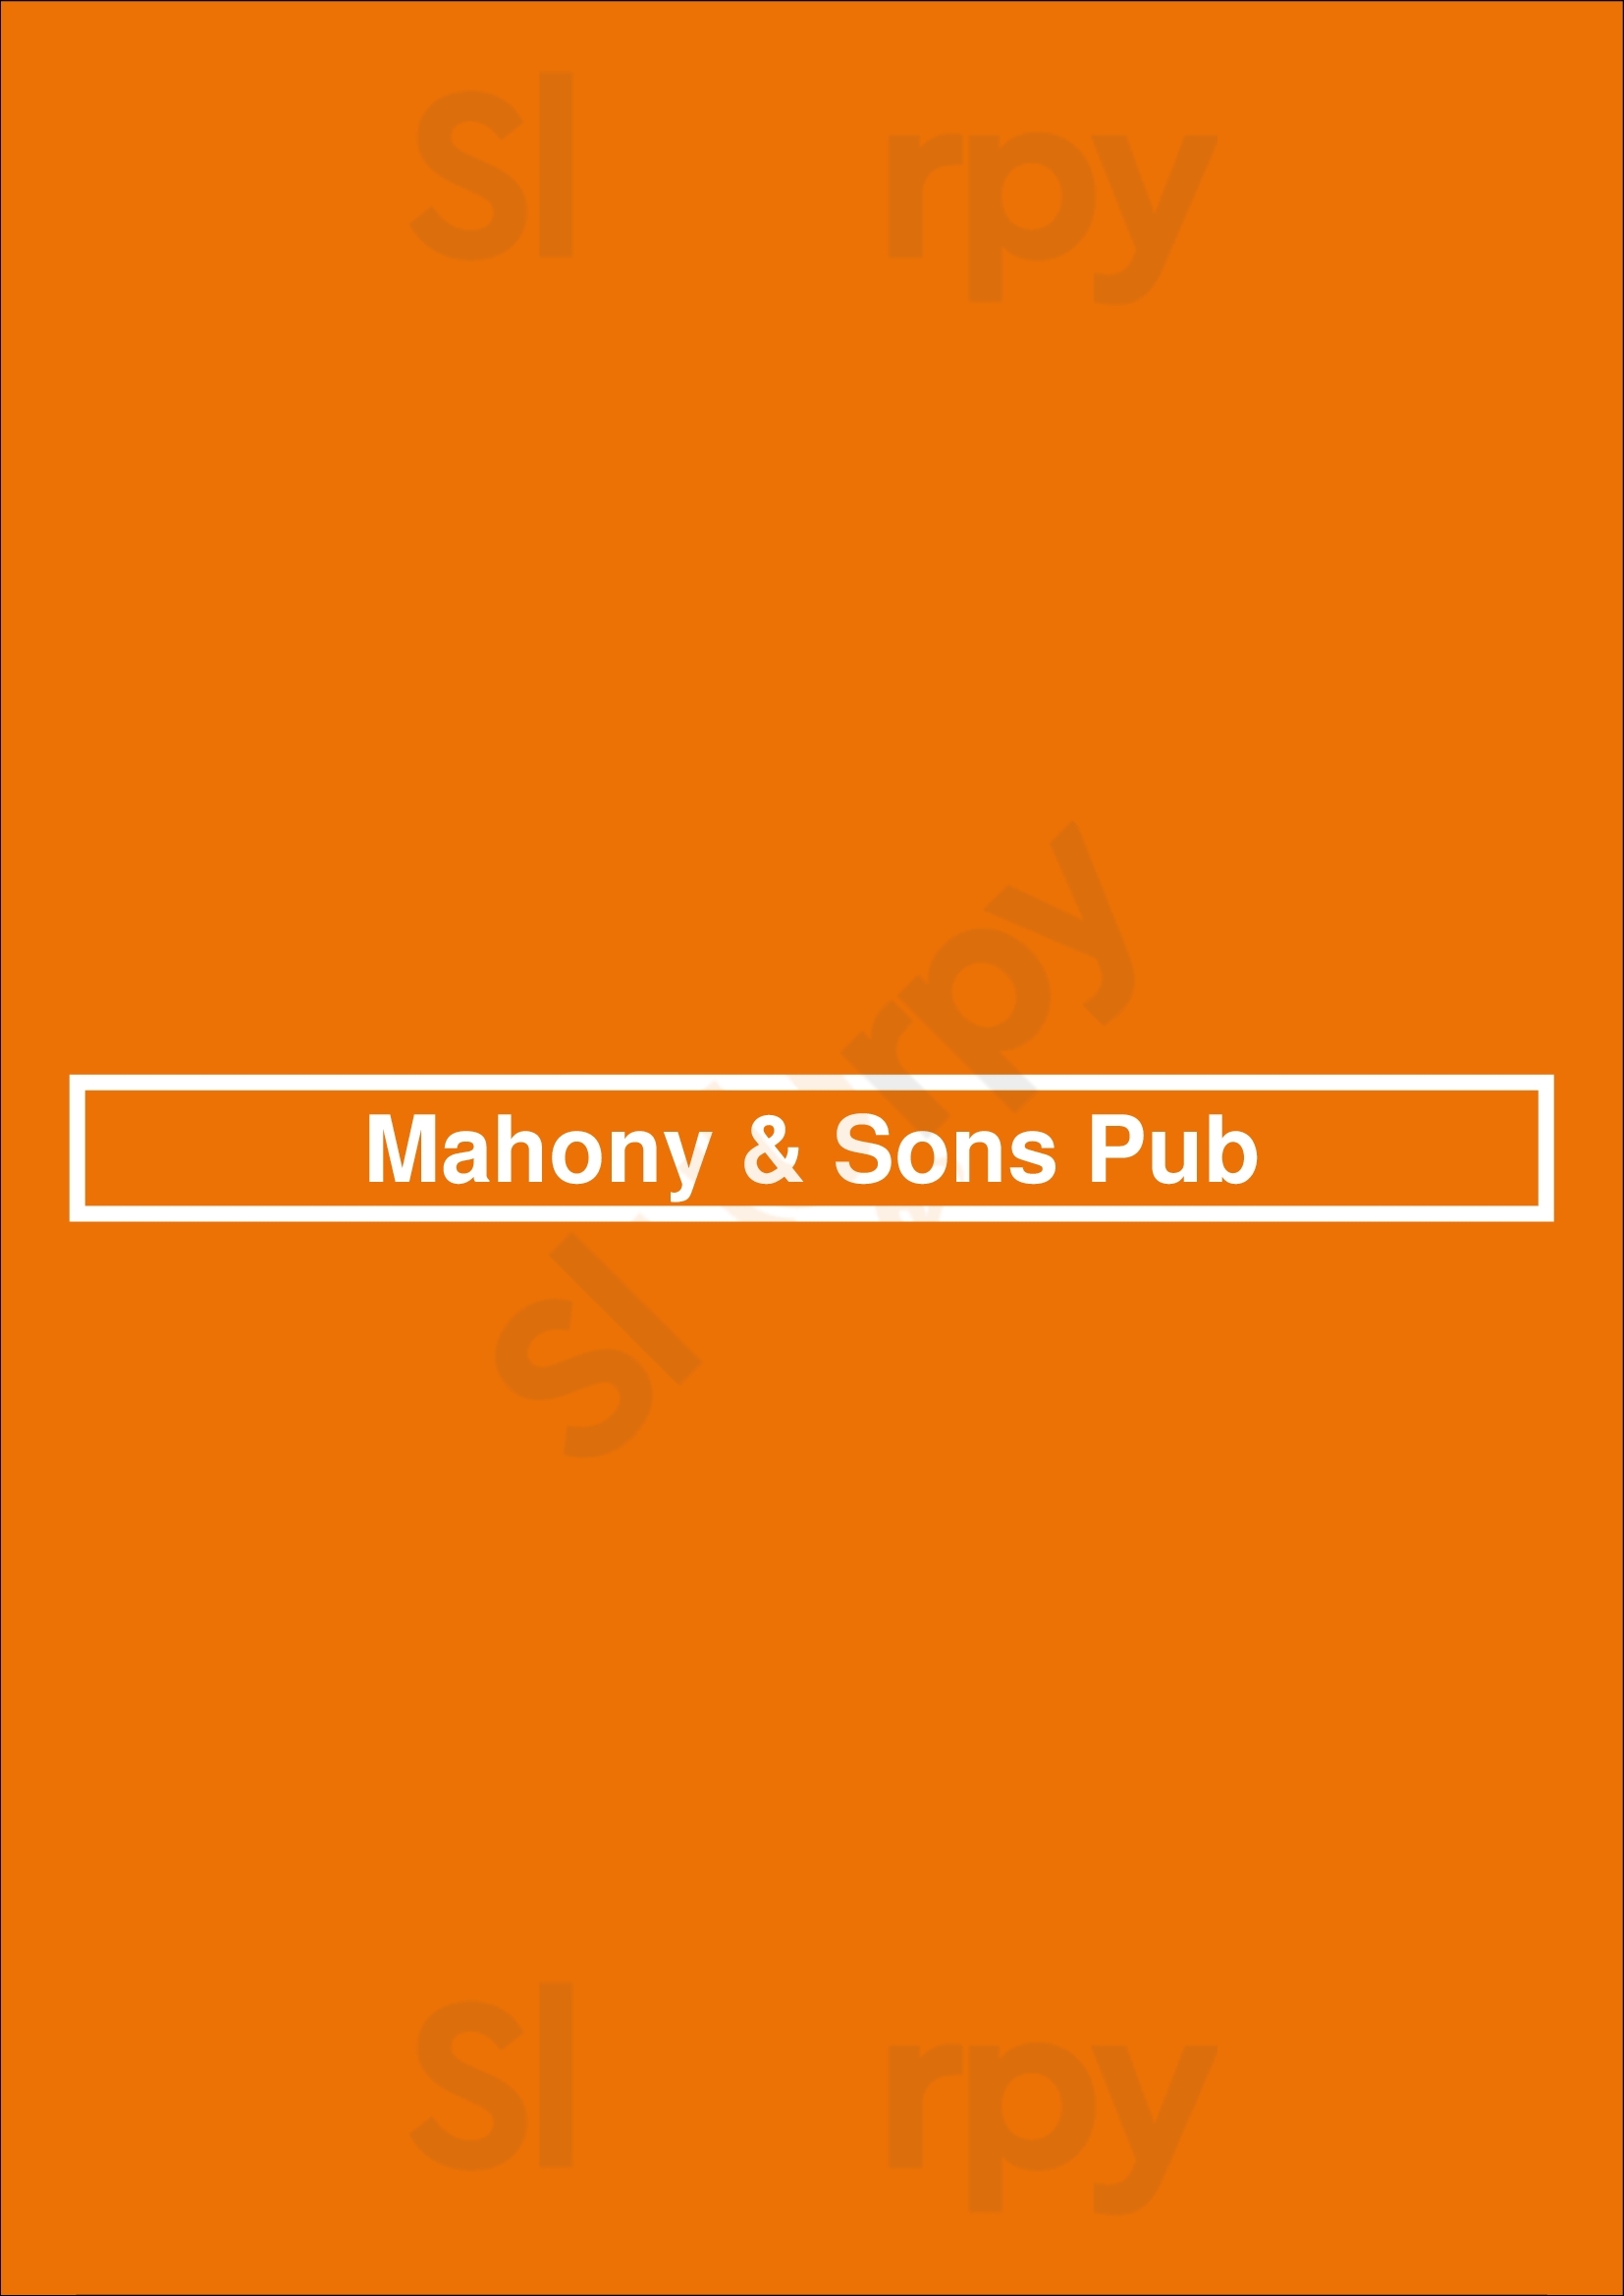 Mahony & Sons Pub Vancouver Menu - 1